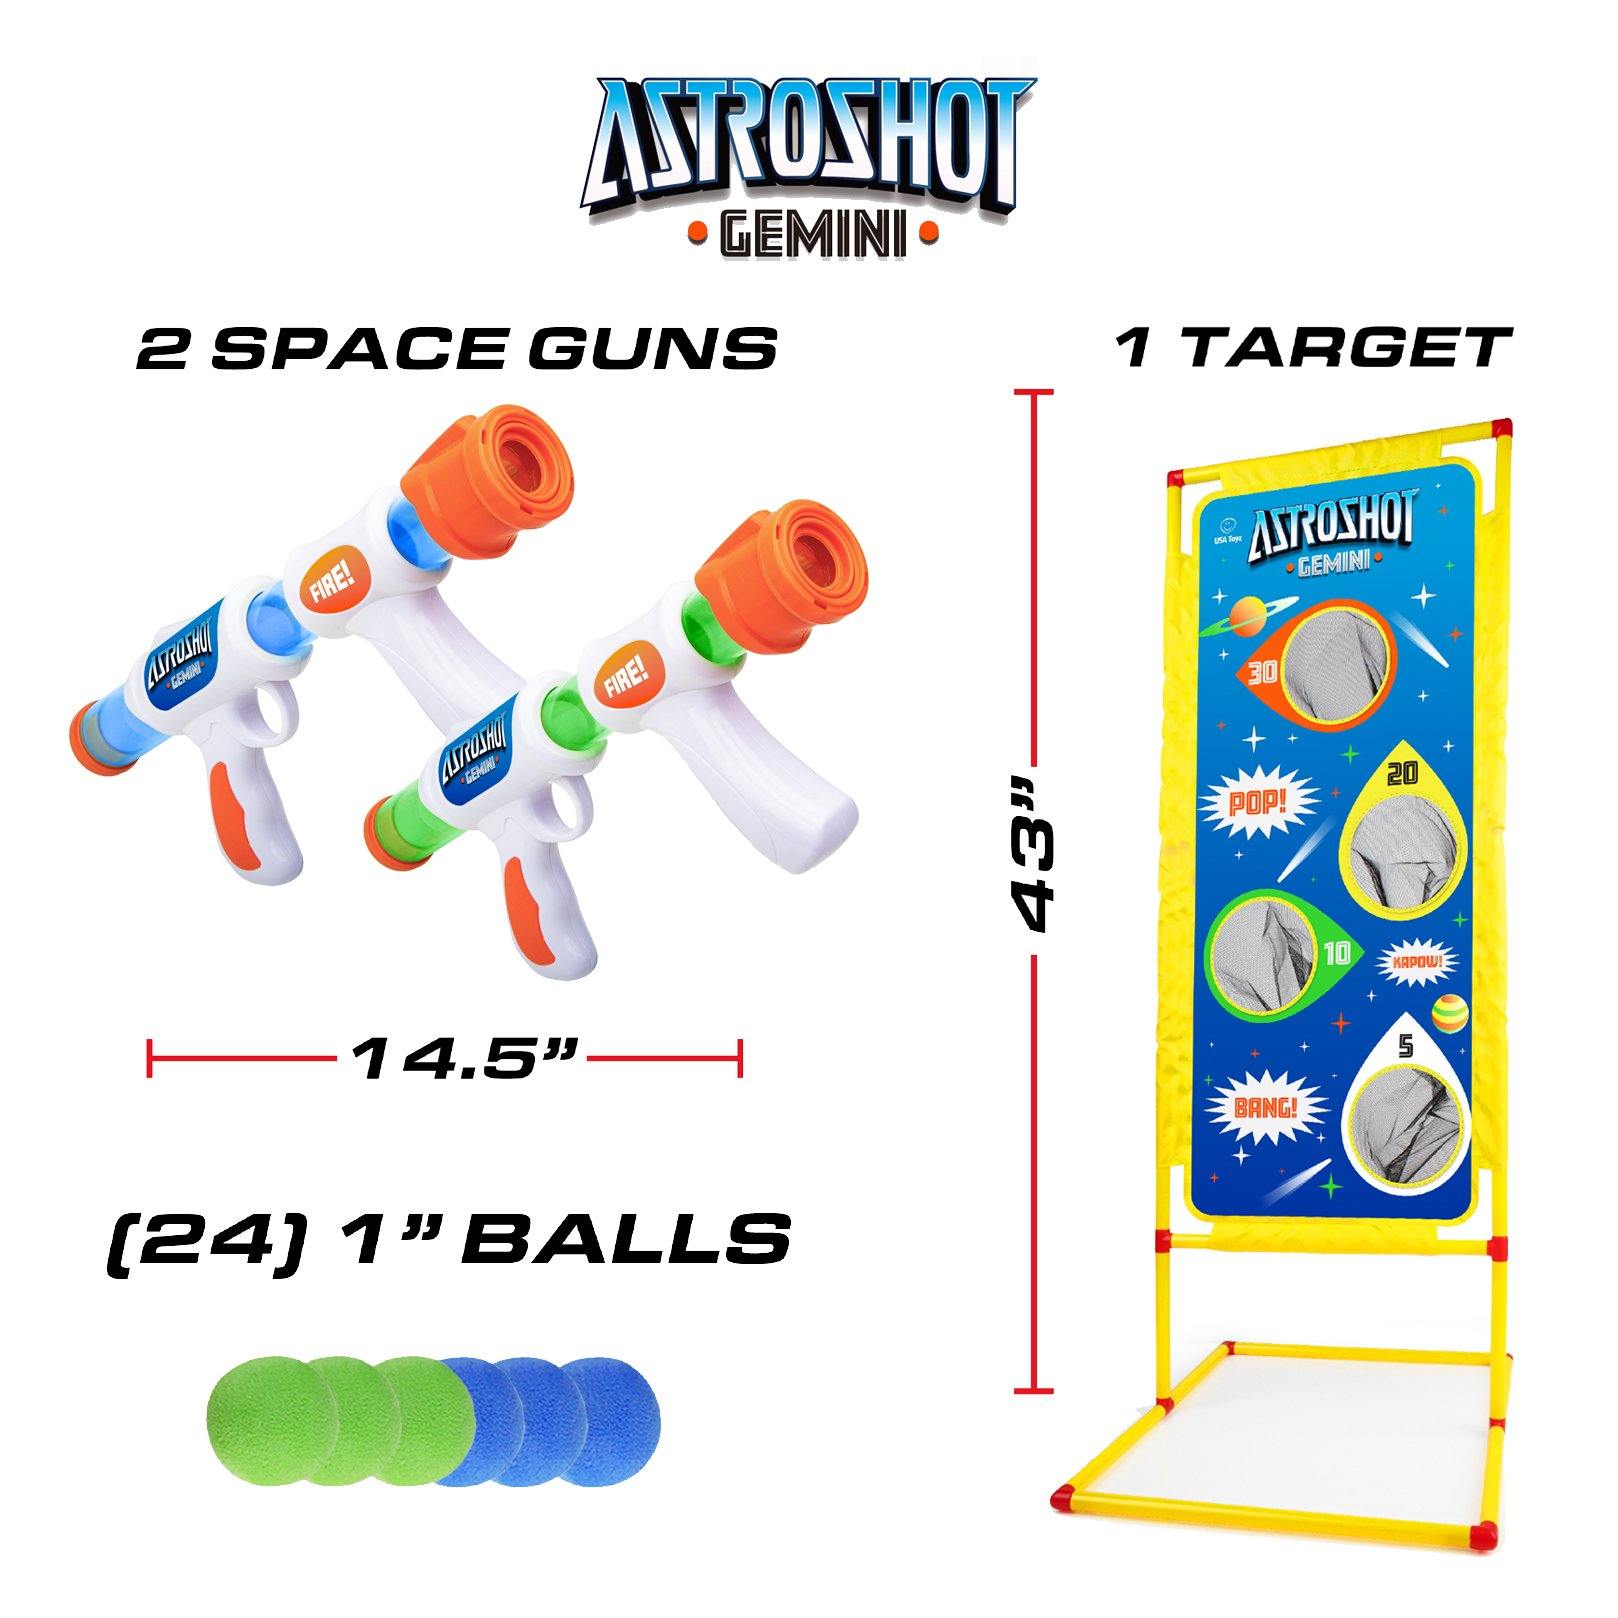 AstroShot Gemini - USA Toyz